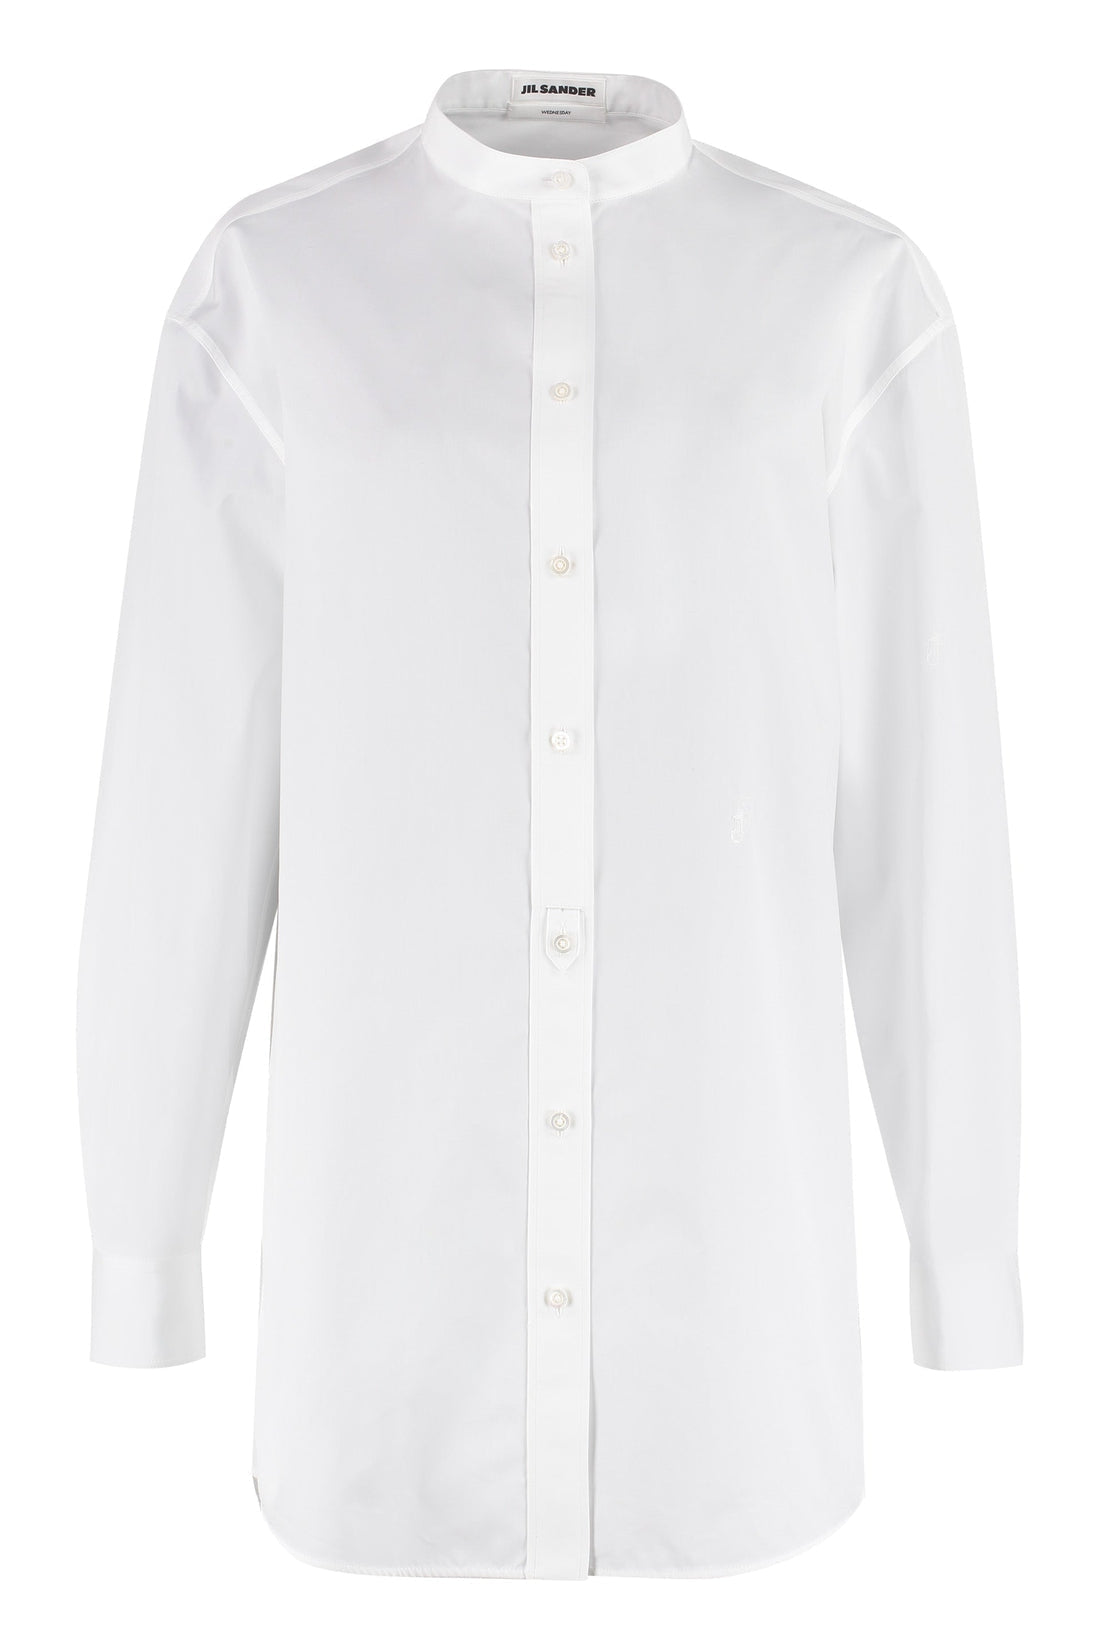 Jil Sander-OUTLET-SALE-Wednesday cotton shirt-ARCHIVIST